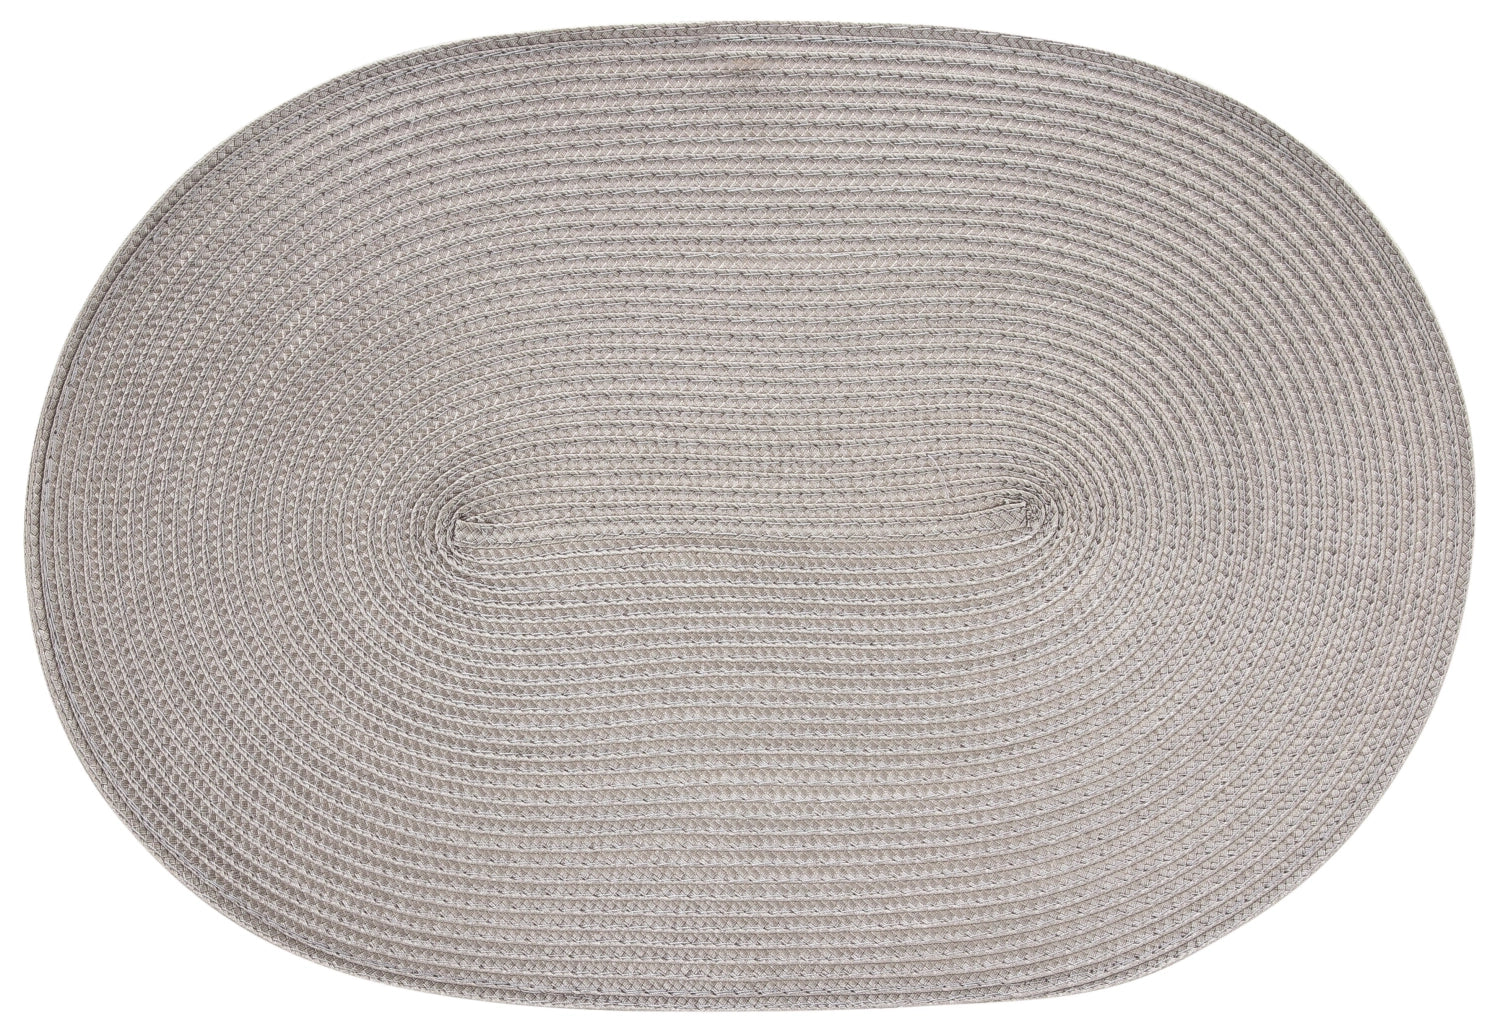 Tischset oval grau 45x31cm - KAQTU Design